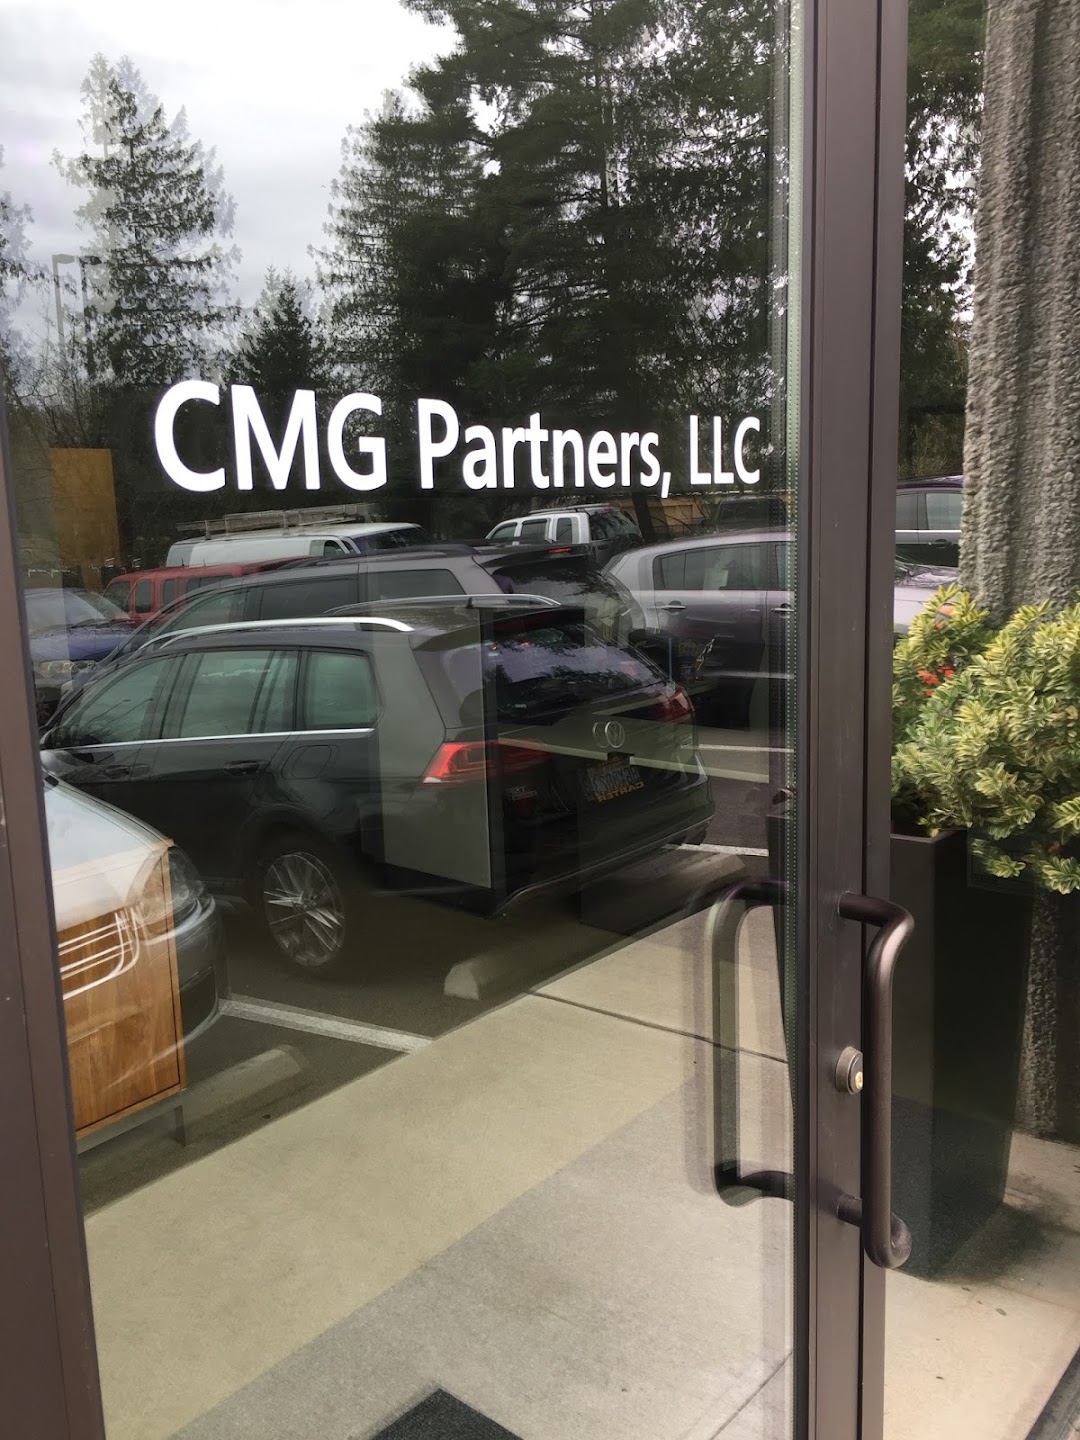 CMG Partners, LLC